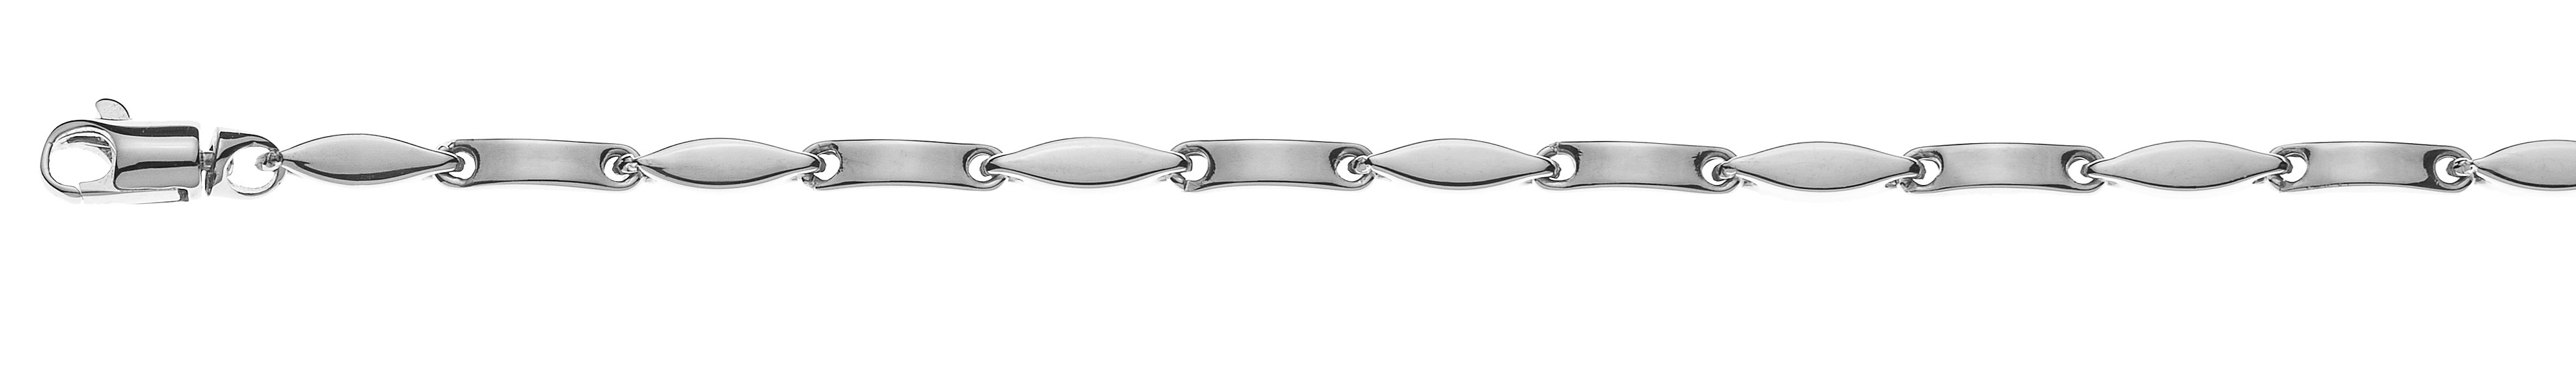 AURONOS Prestige Bracelet en or blanc 18K 19cm 2.3mm